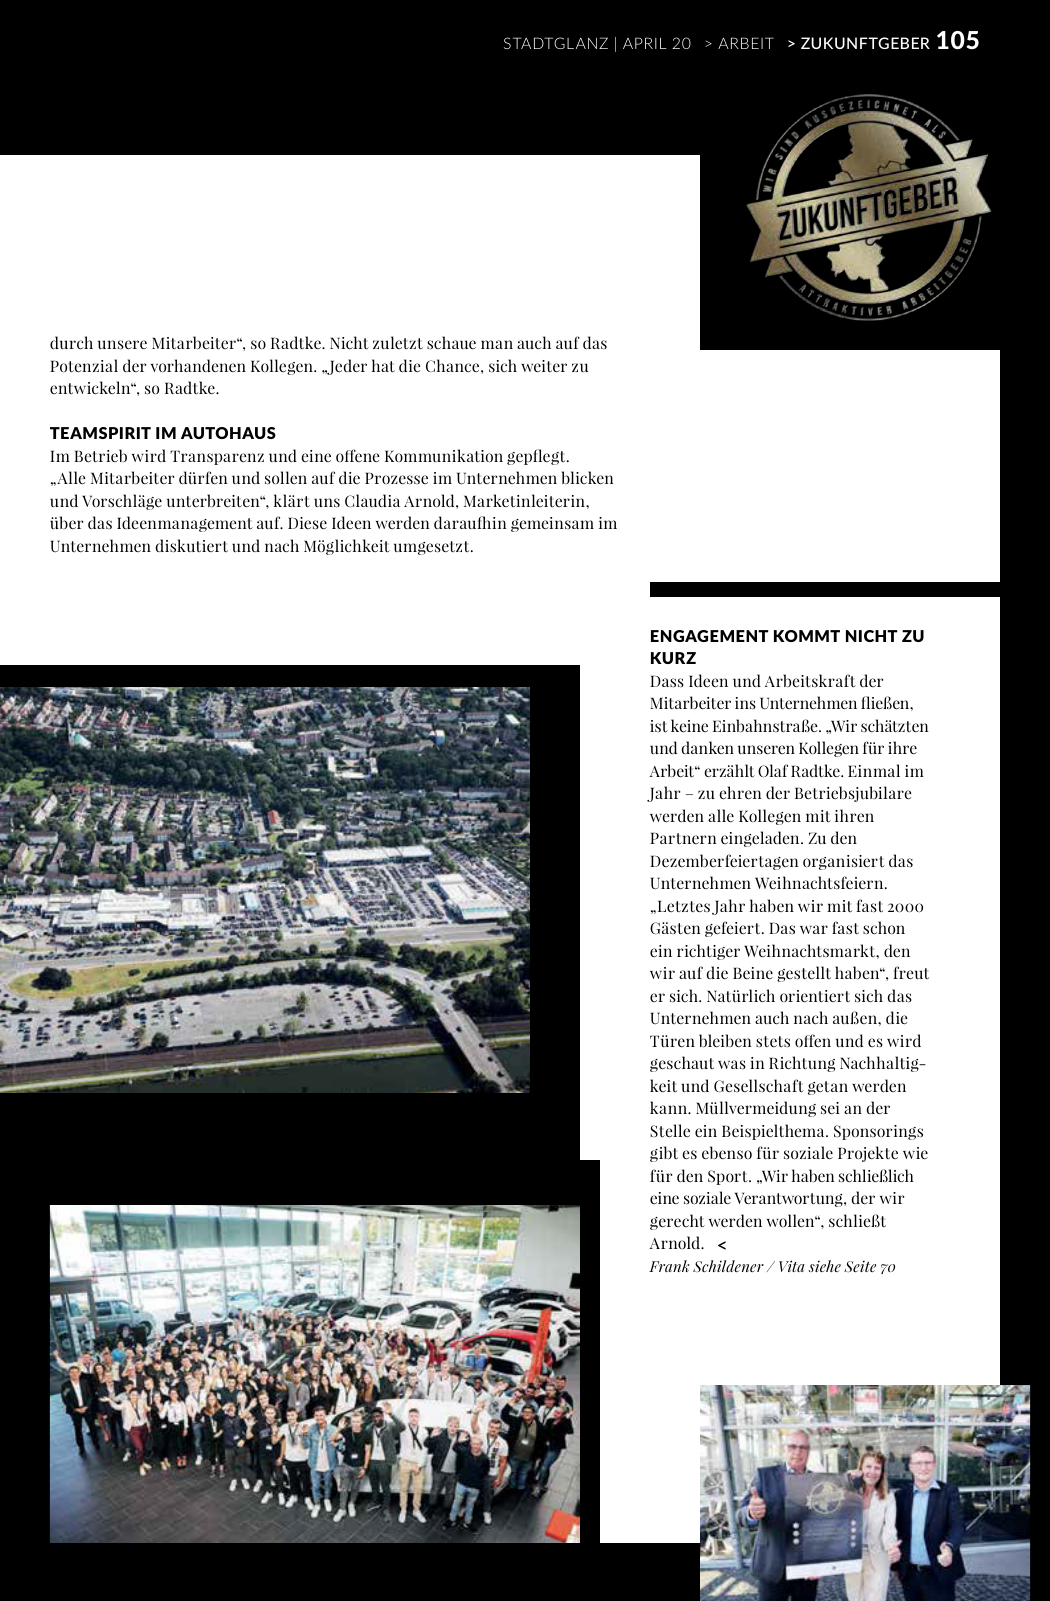 Vorschau Stadtglanz April 2020 Seite 105